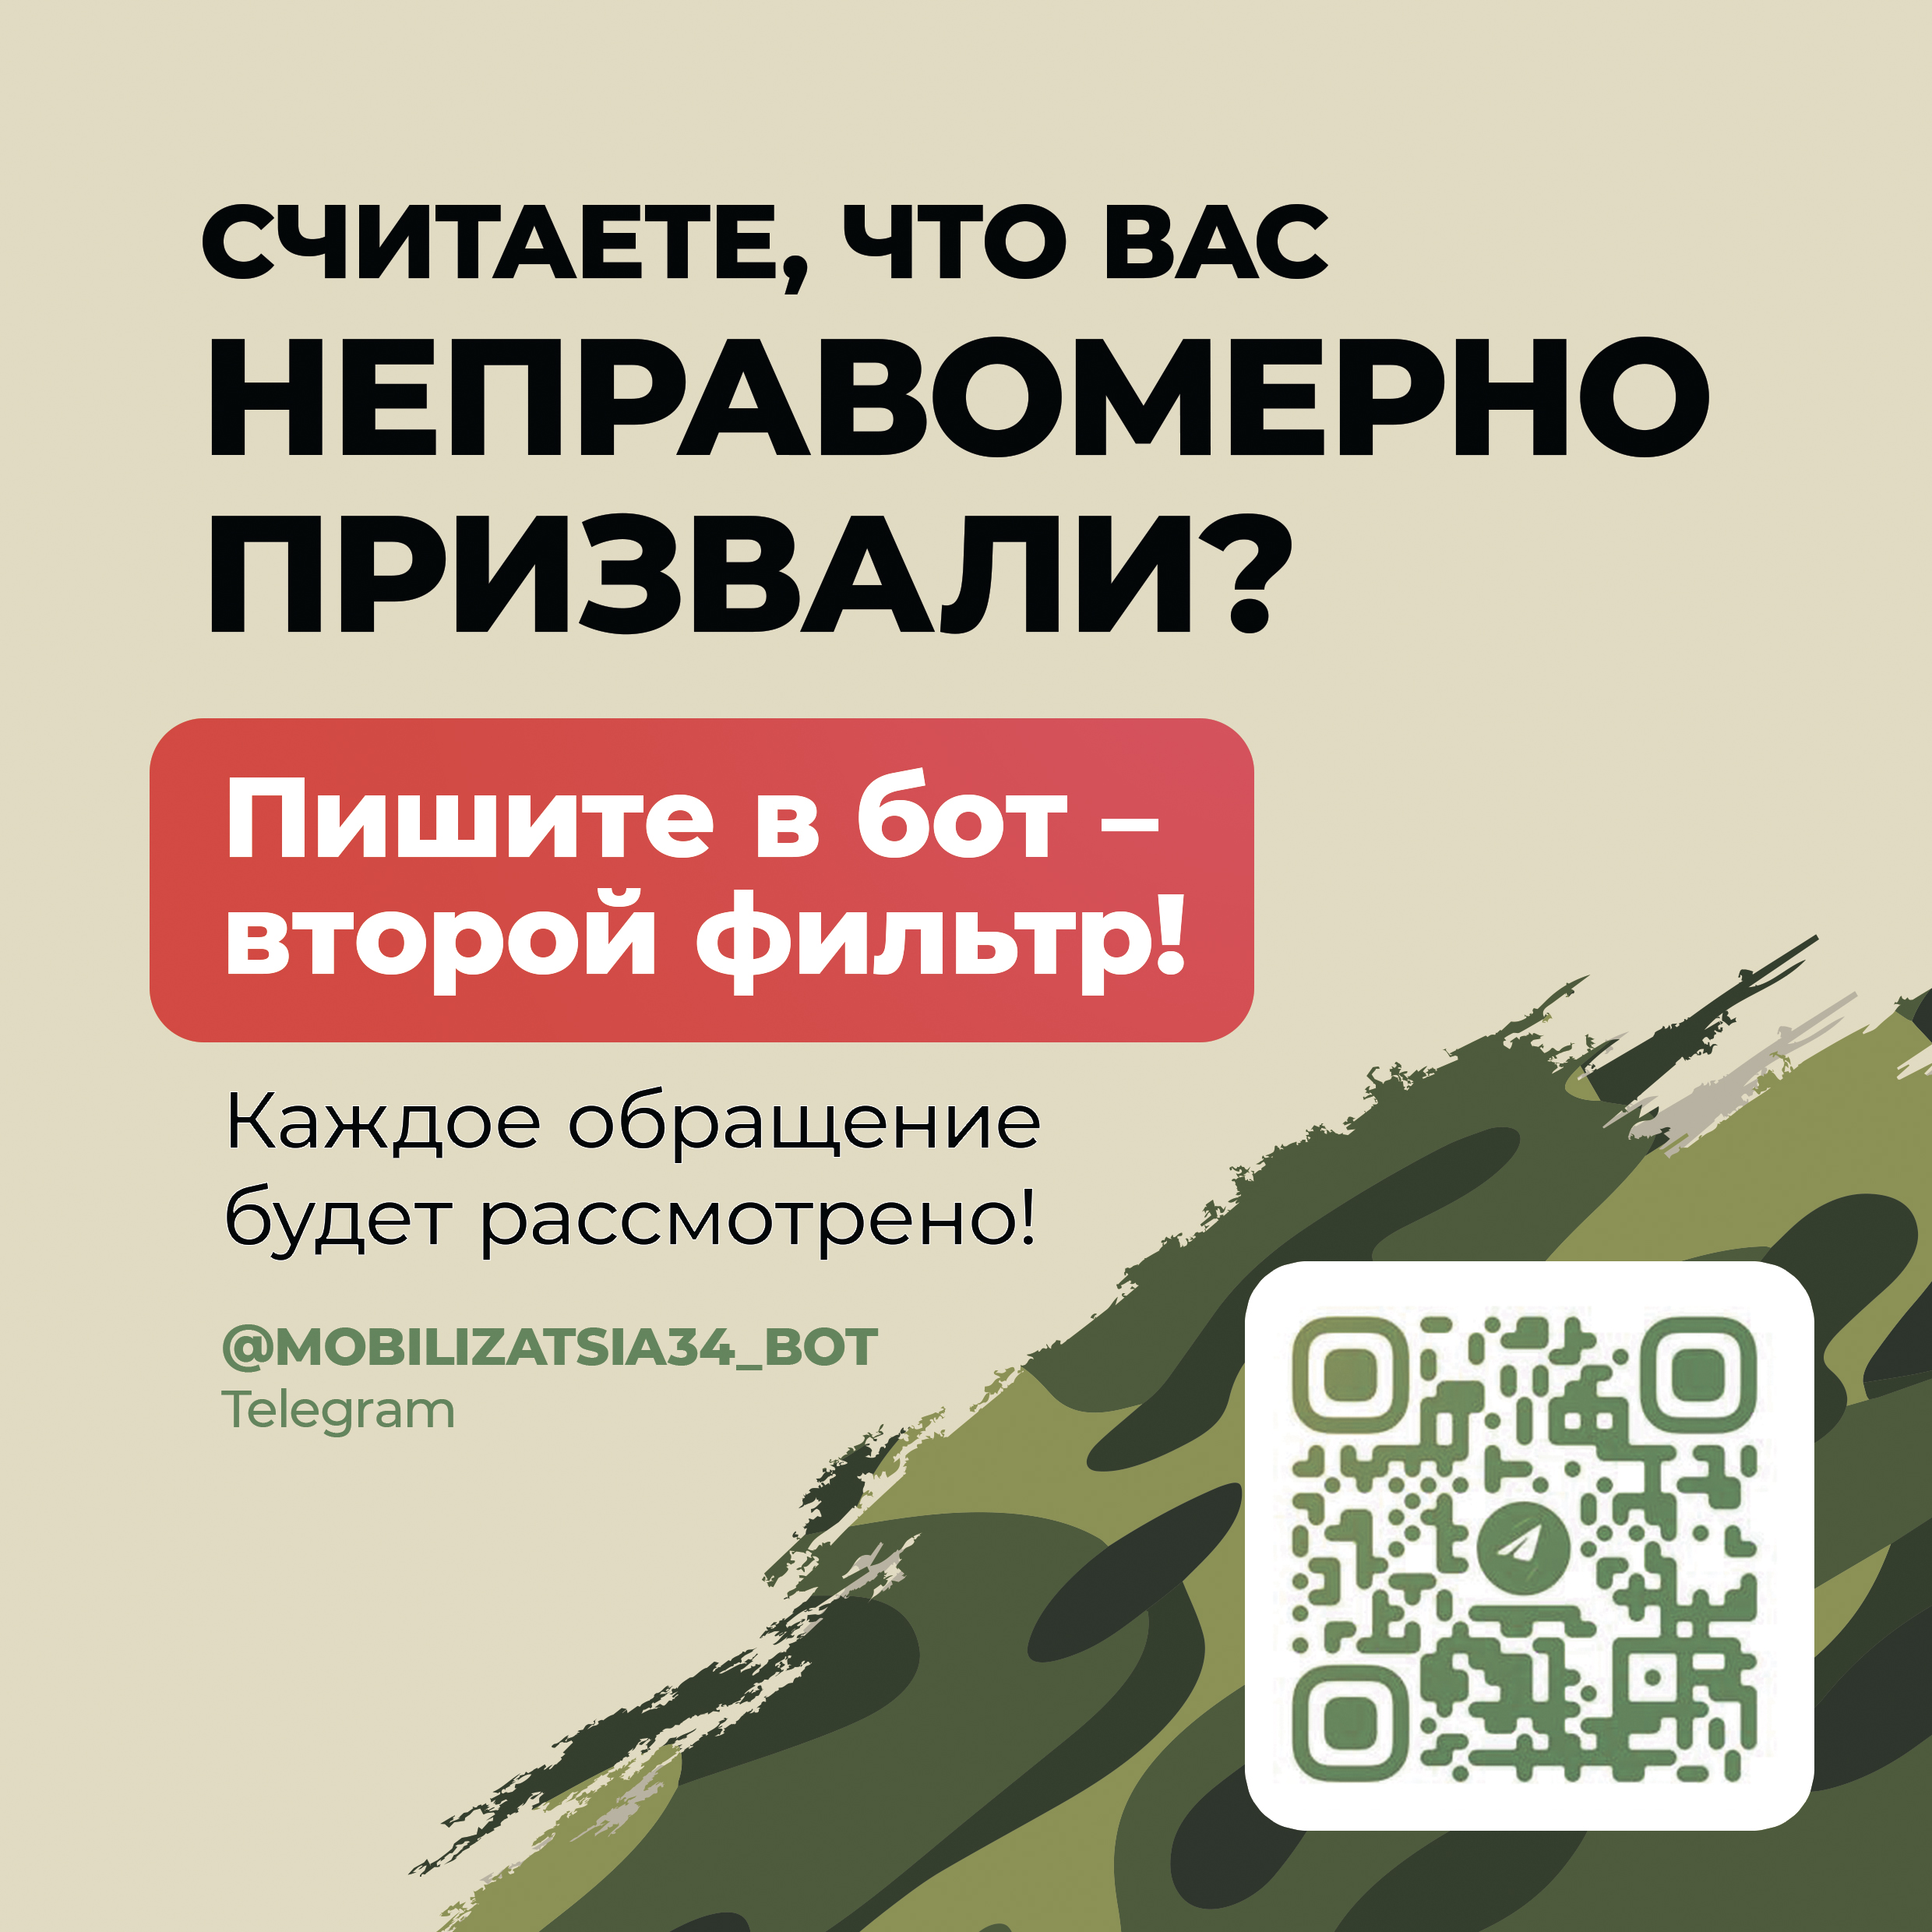 https://serad.ru/images/doc2022/raznoe/mobilization-26092022-1.jpg